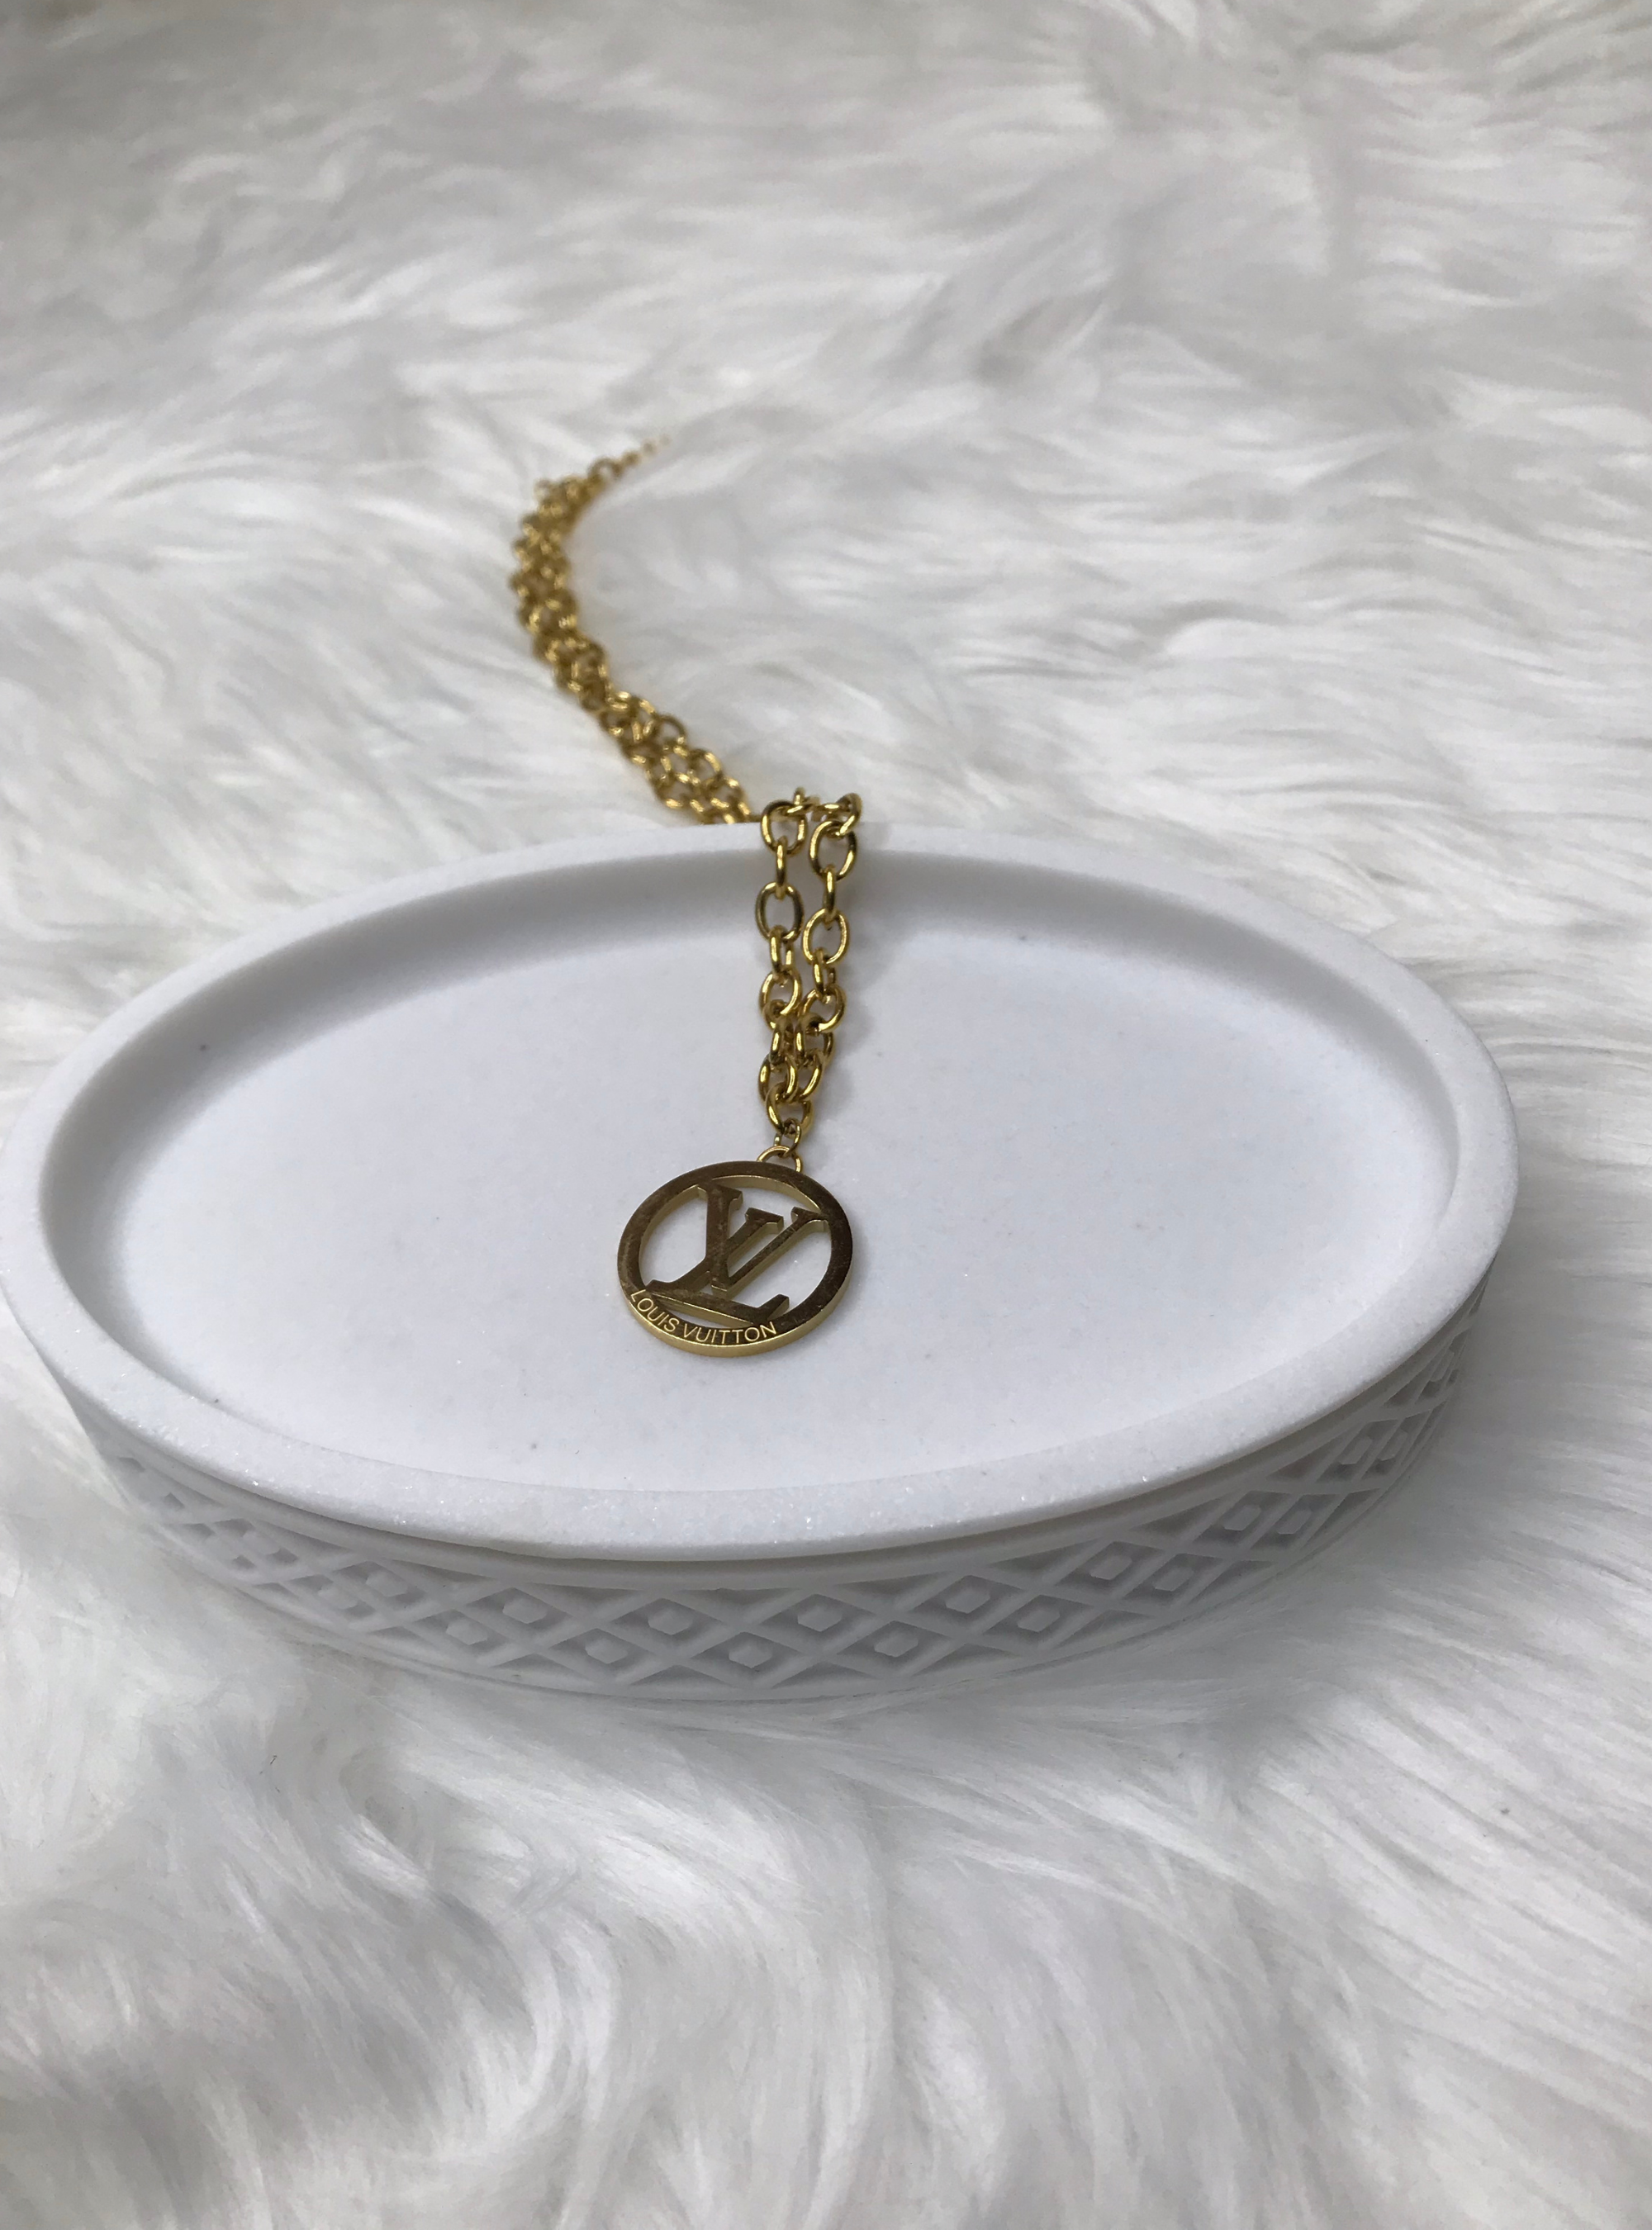 SOLD OUT Rework Vintage Louis Vuitton White LV Necklace